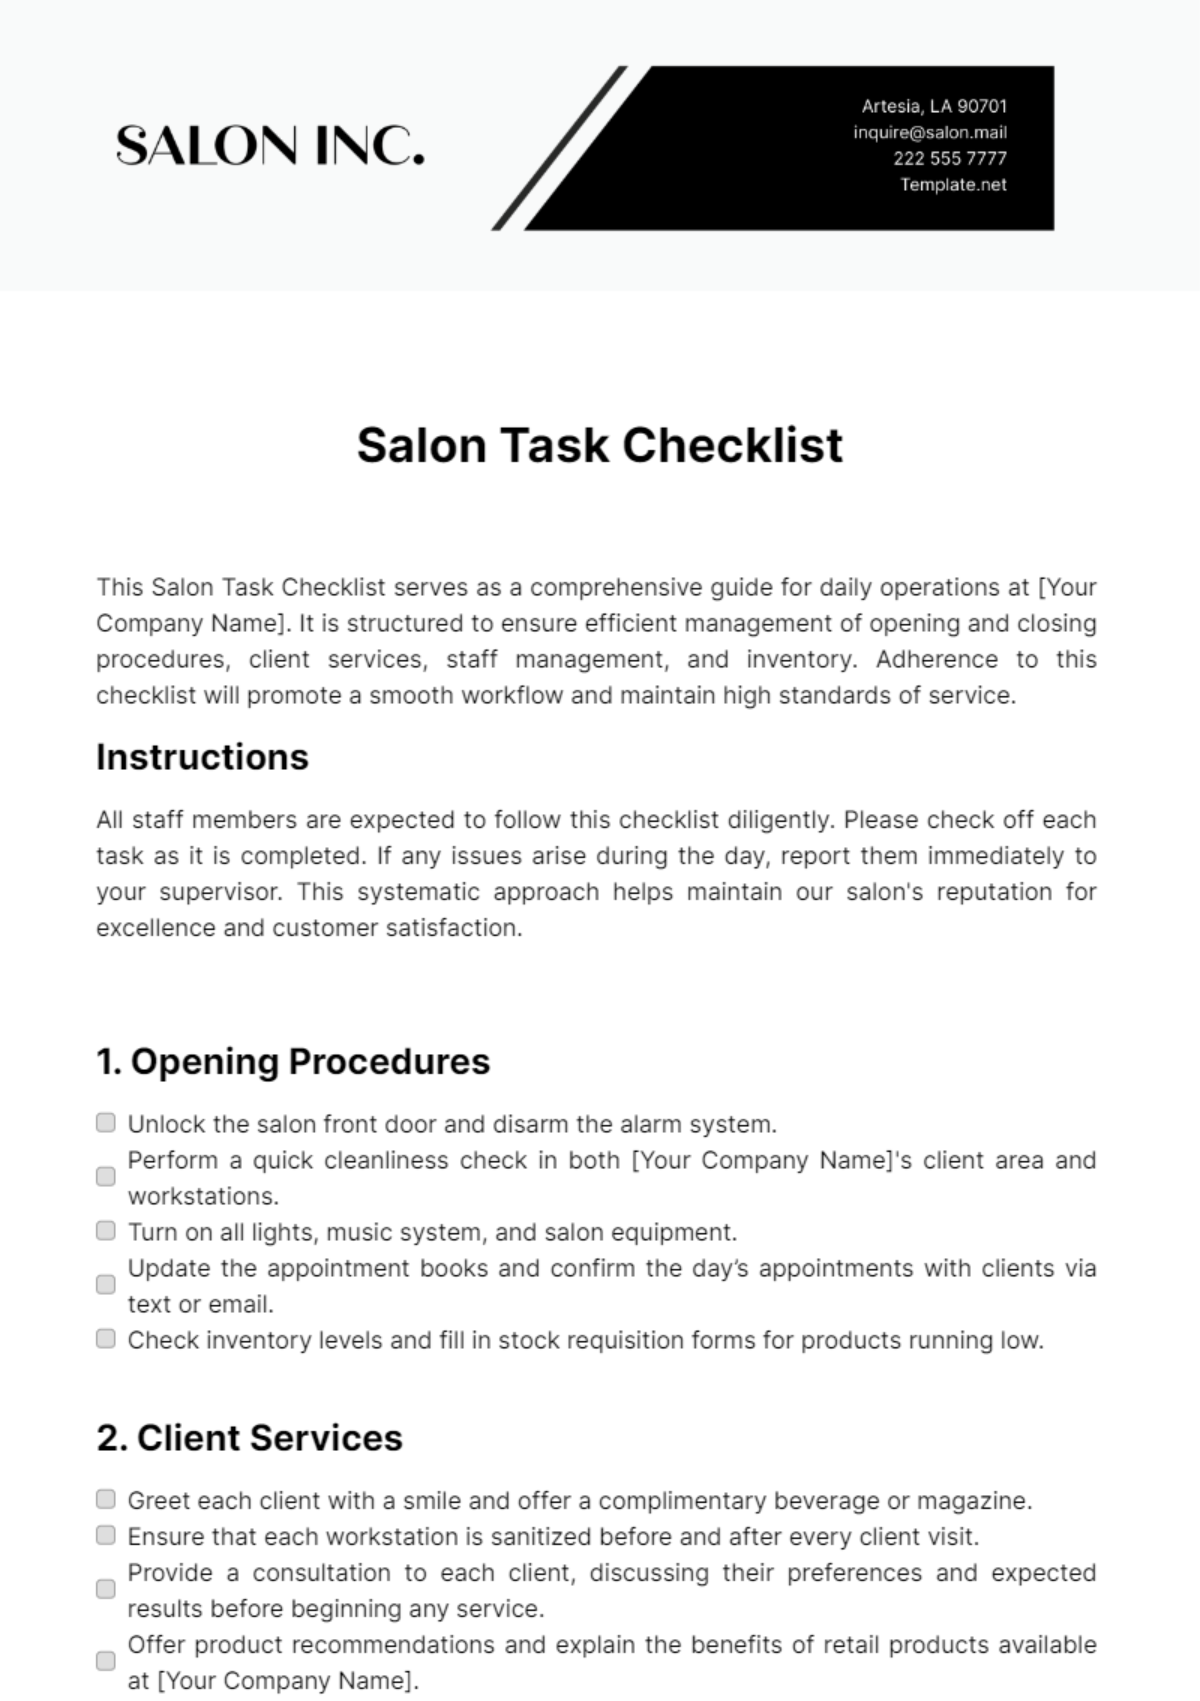 Salon Task Checklist Template